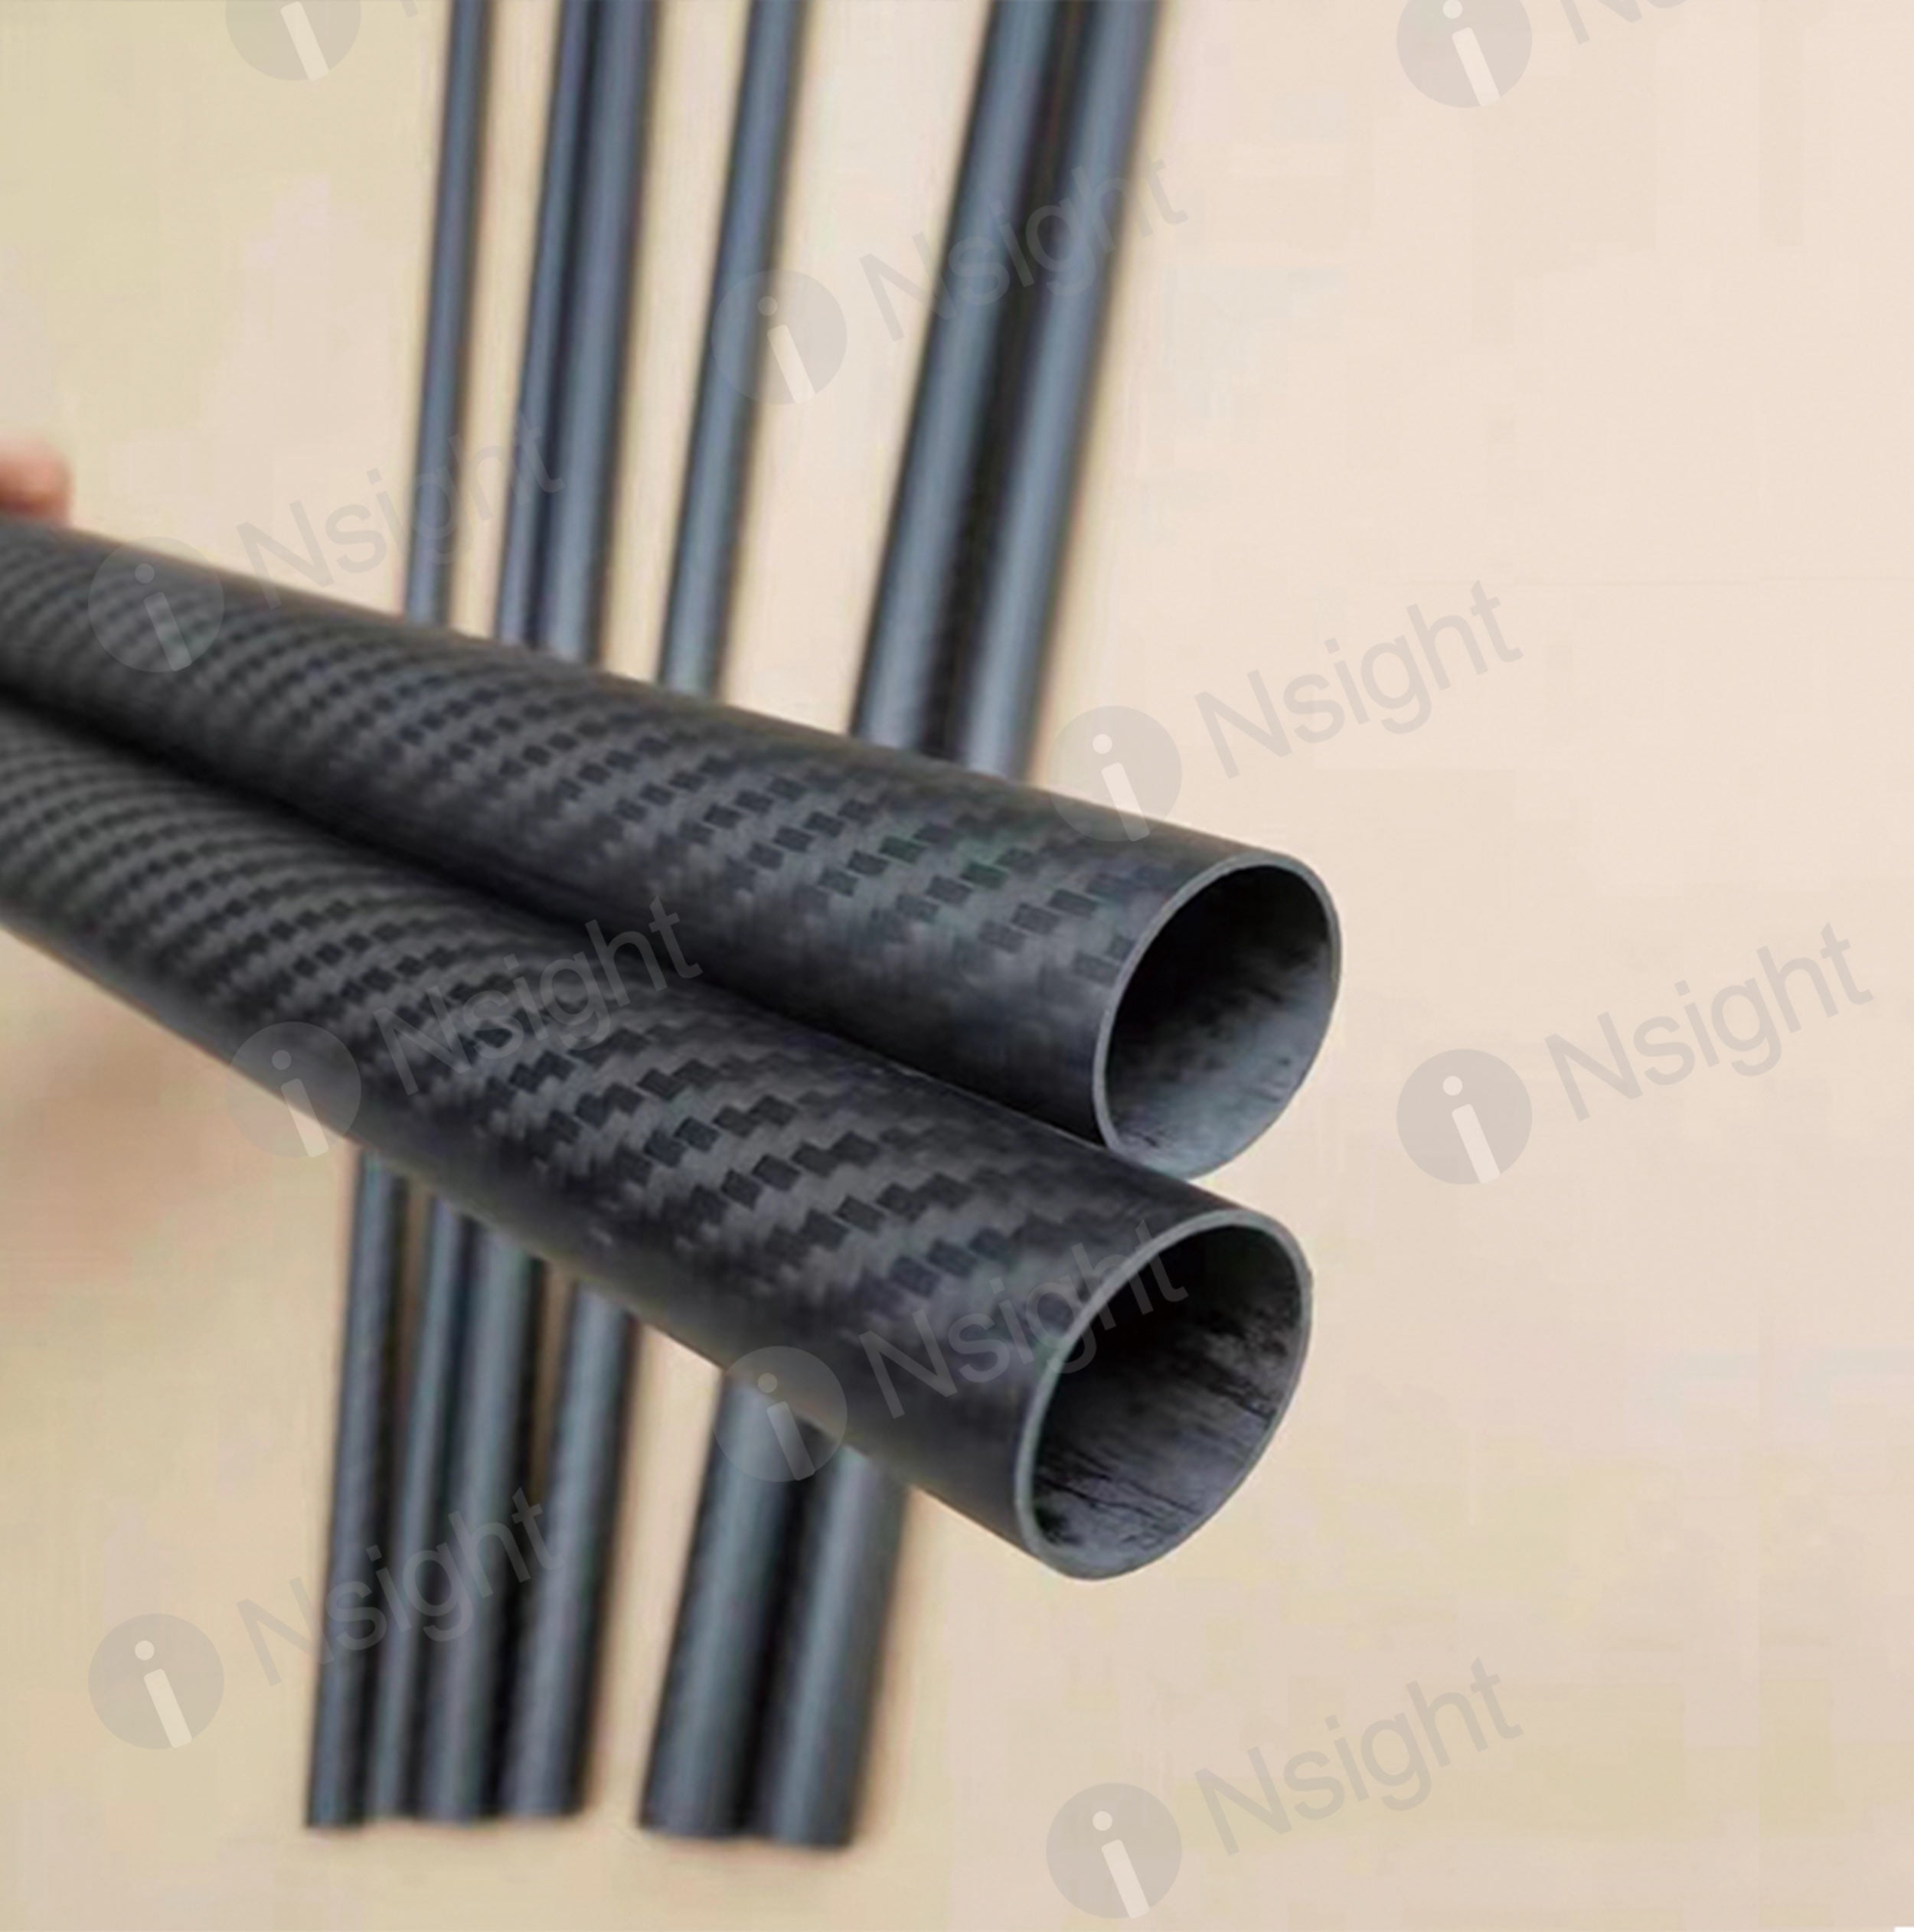 Solid Carbon Rod Carbon Fiber Rod,Carbon Fibre,2pcs 500mm Length Carbon  Fiber Tube Carbon Pipe for Fishing Rods,Kites,Tents and Tripods (Color 